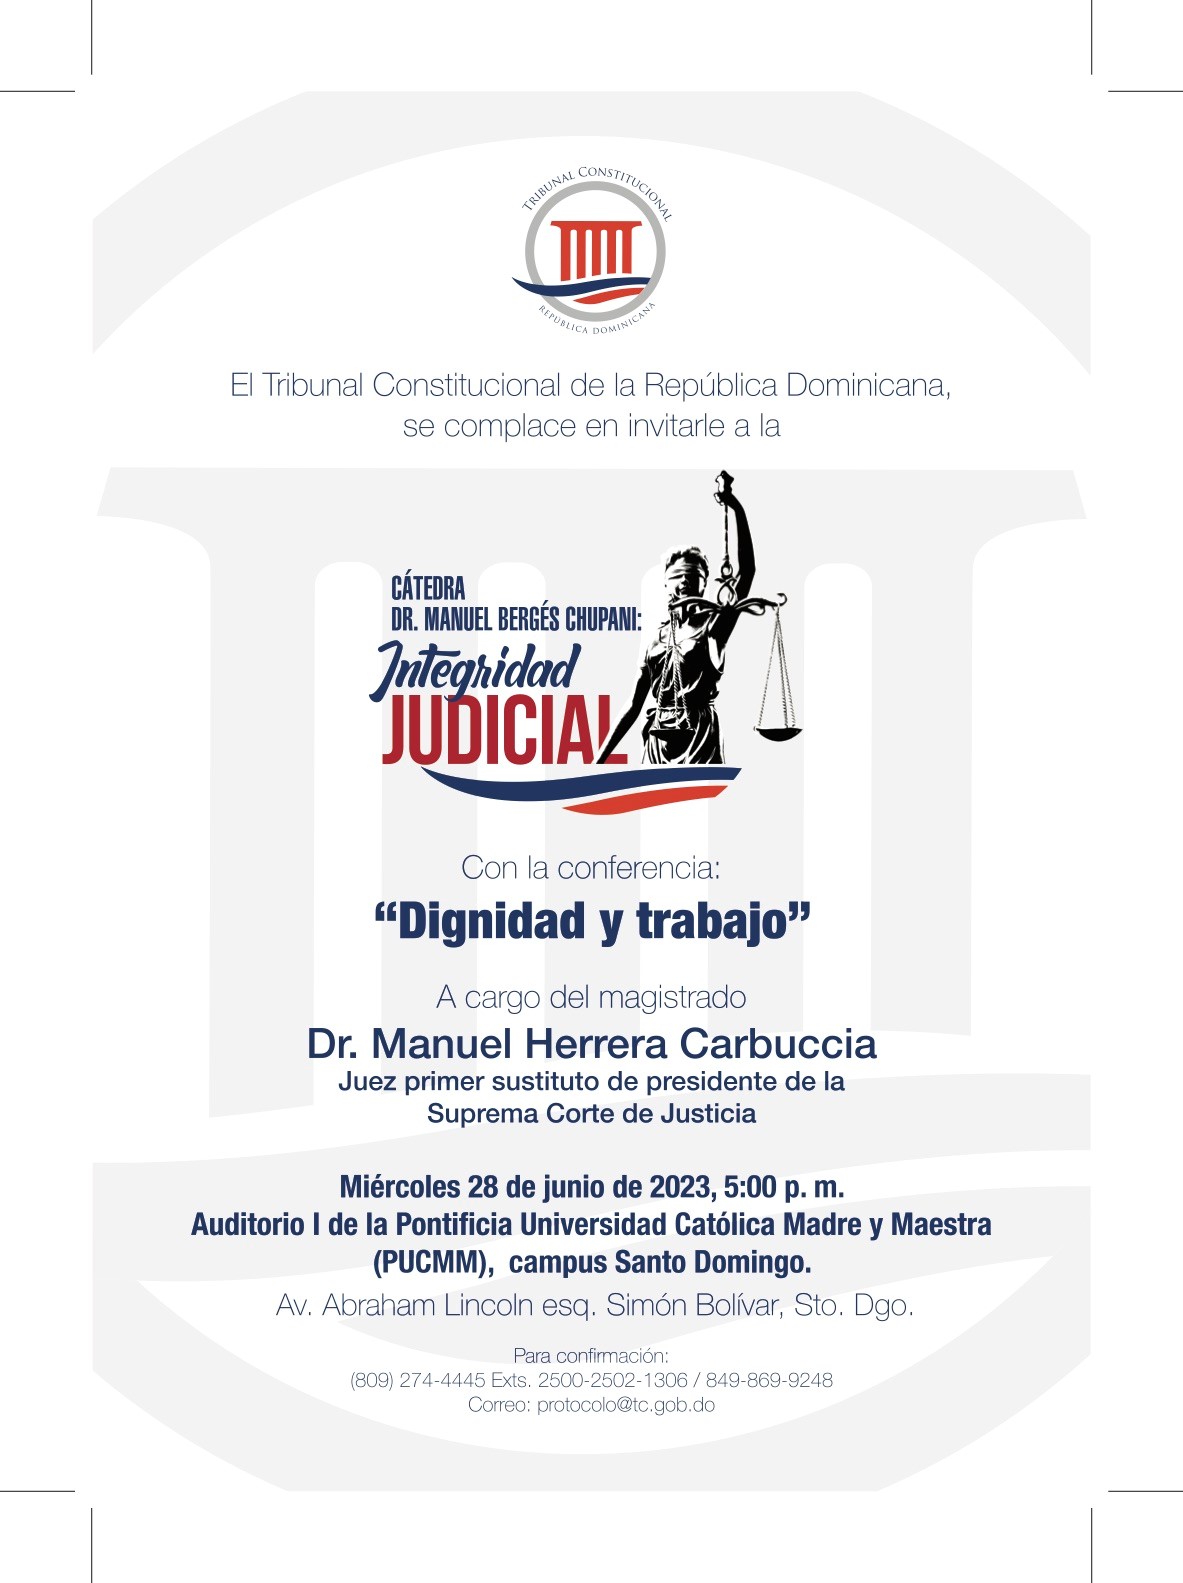 Catedra Dr. Manuel Berges Chupani: Integridad Judicial